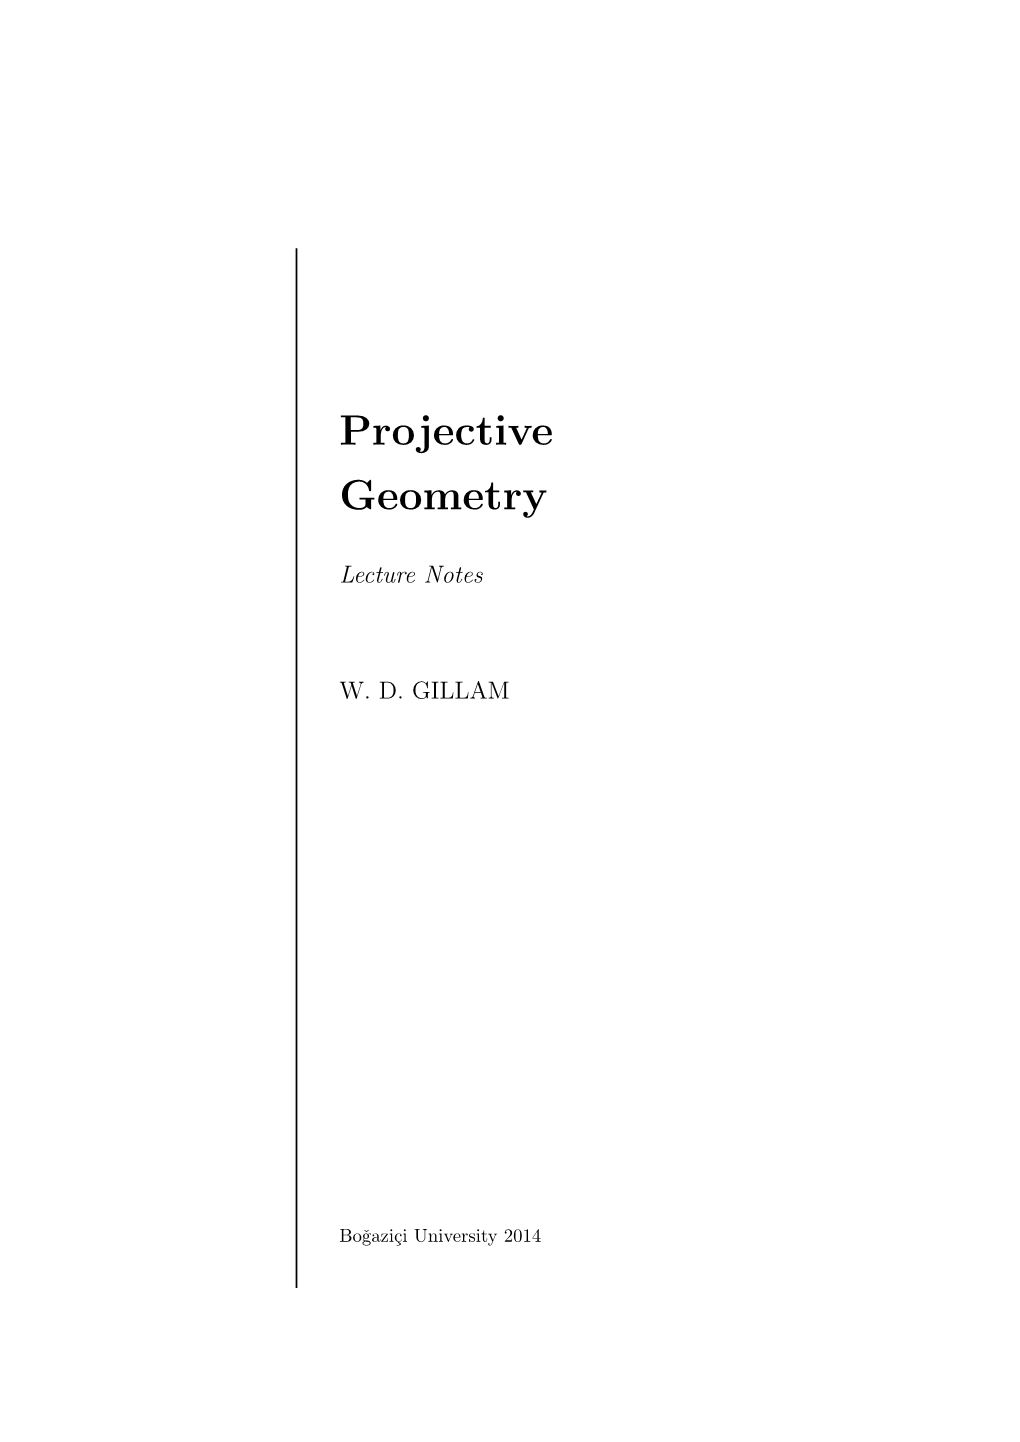 Projective Geometry